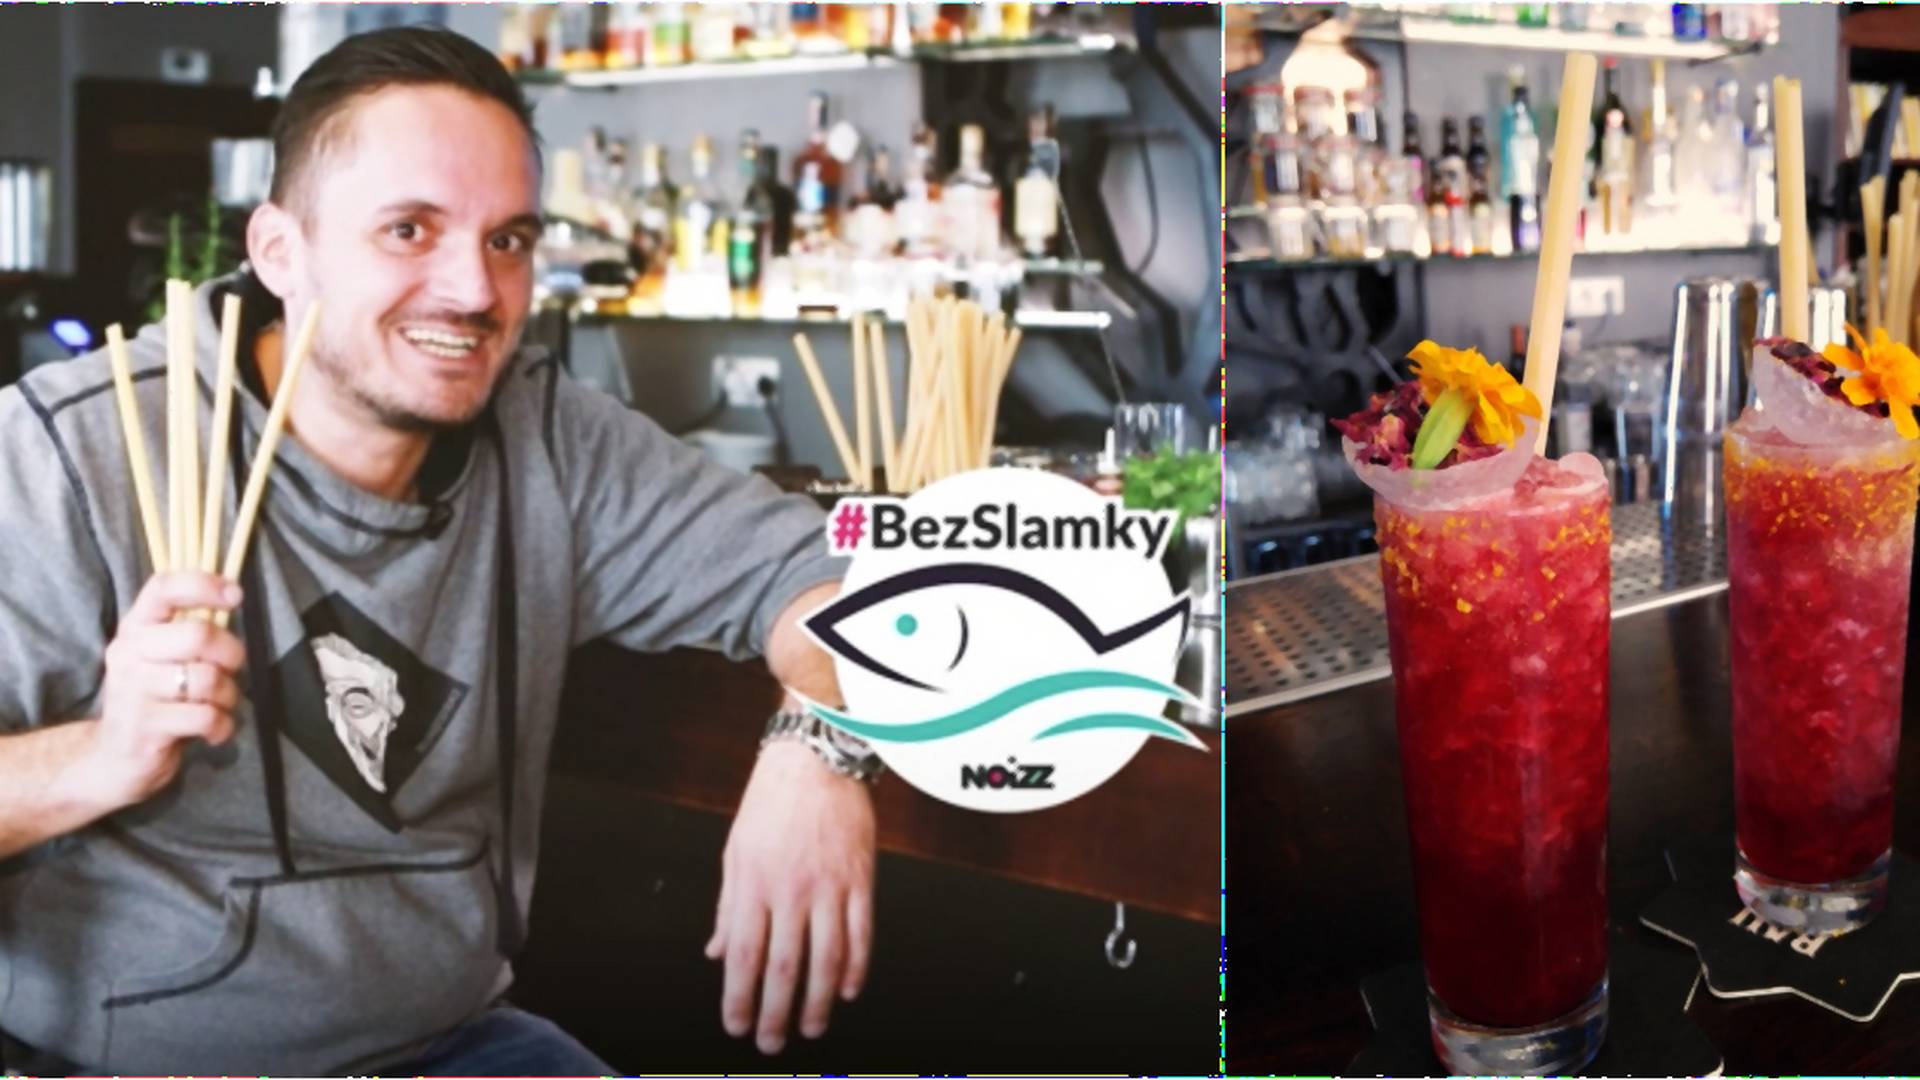 Ďalší podnik v Bratislave je #BezSlamky: Baudelaire bar ich nahradil cestovinami